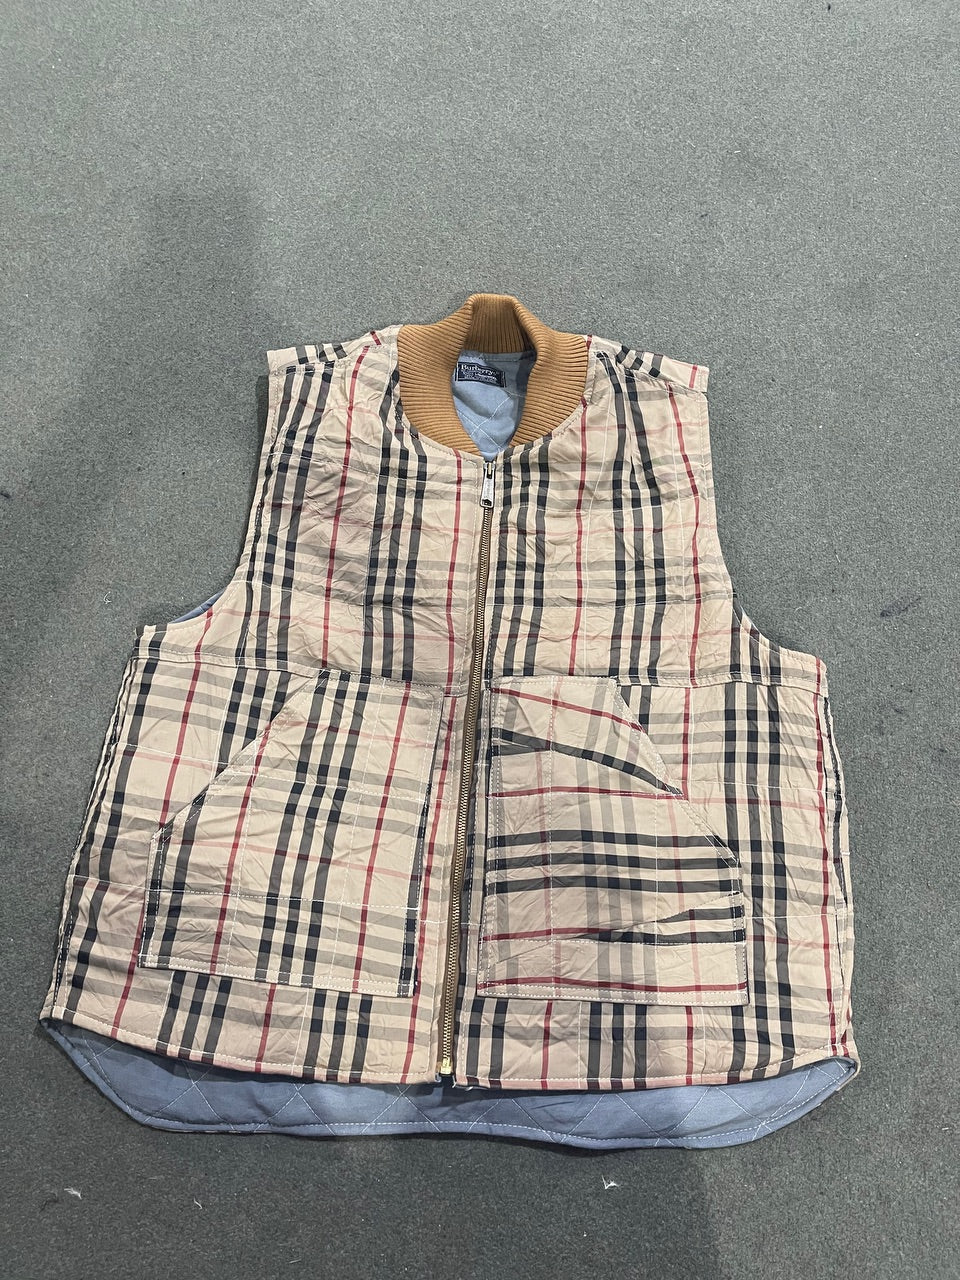 Burberry rework vest 15 piece